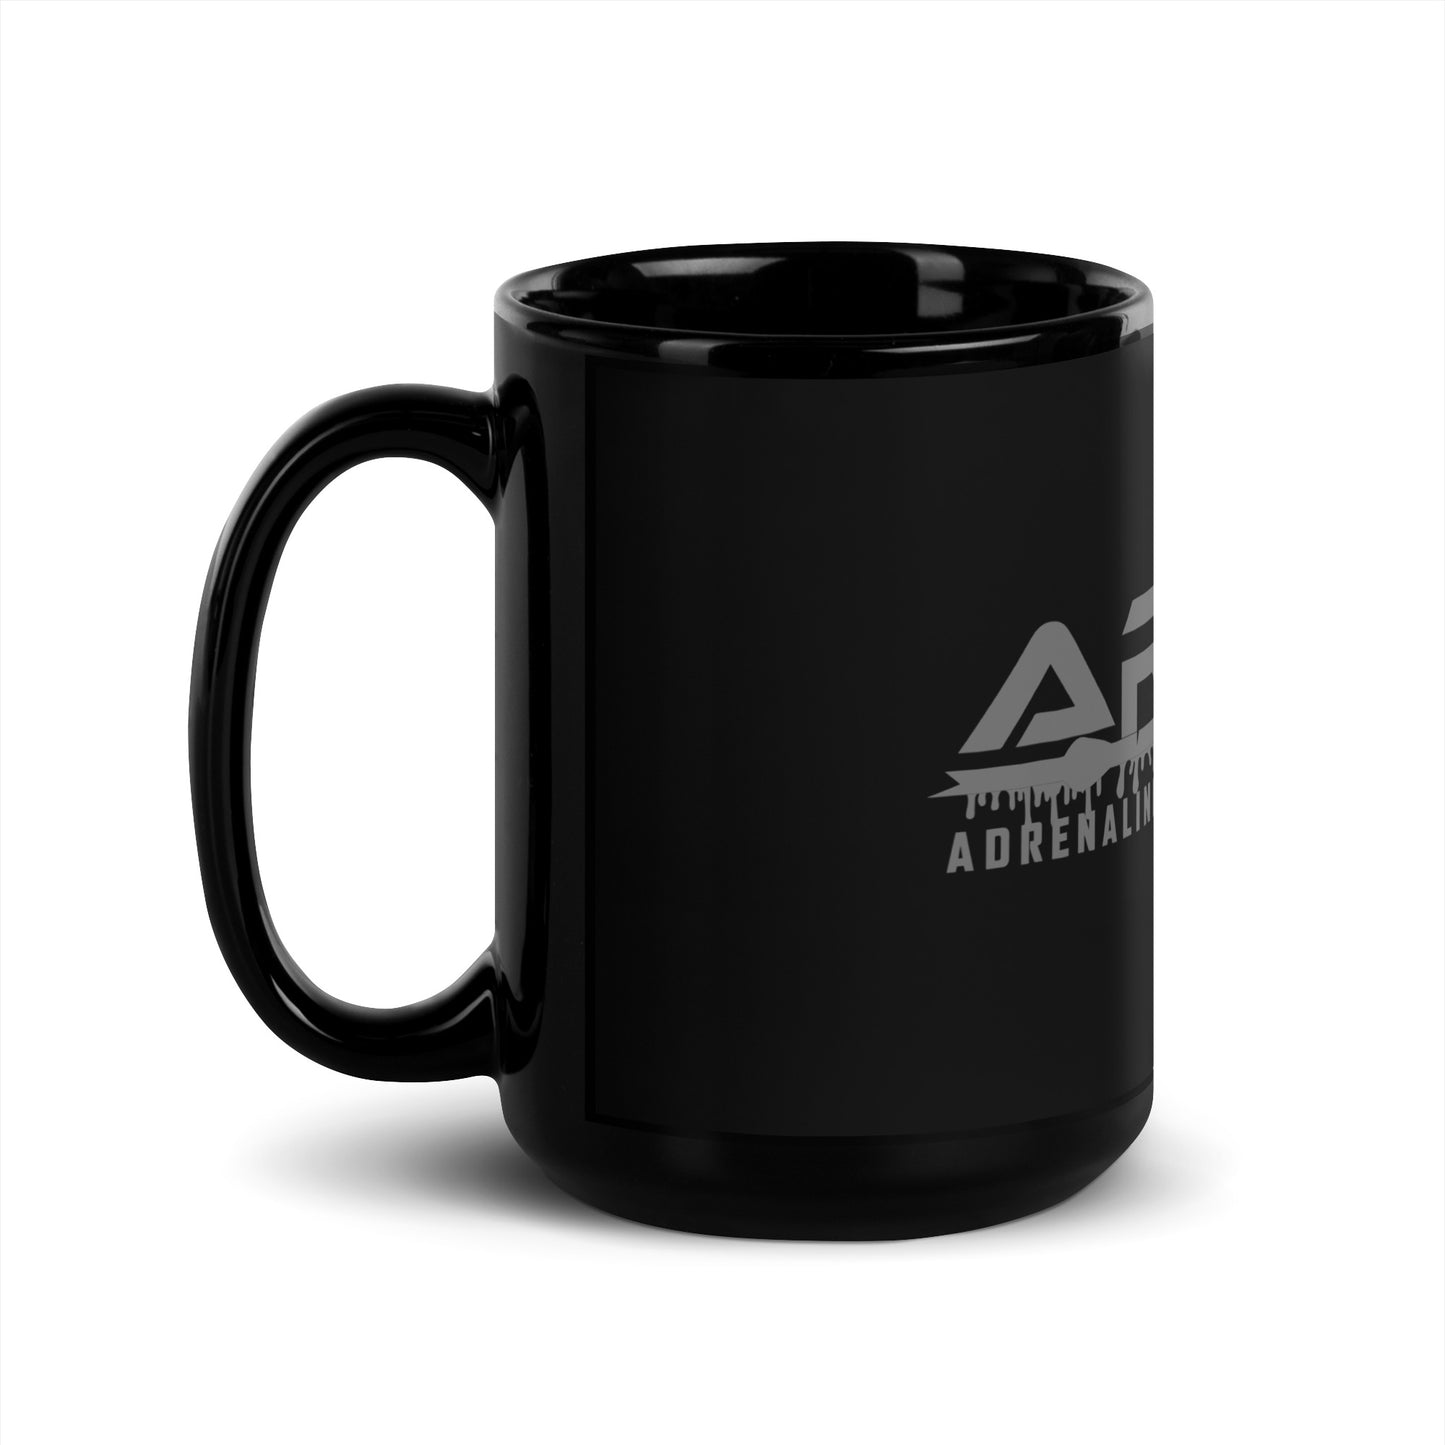 AROTV Black Glossy Mug